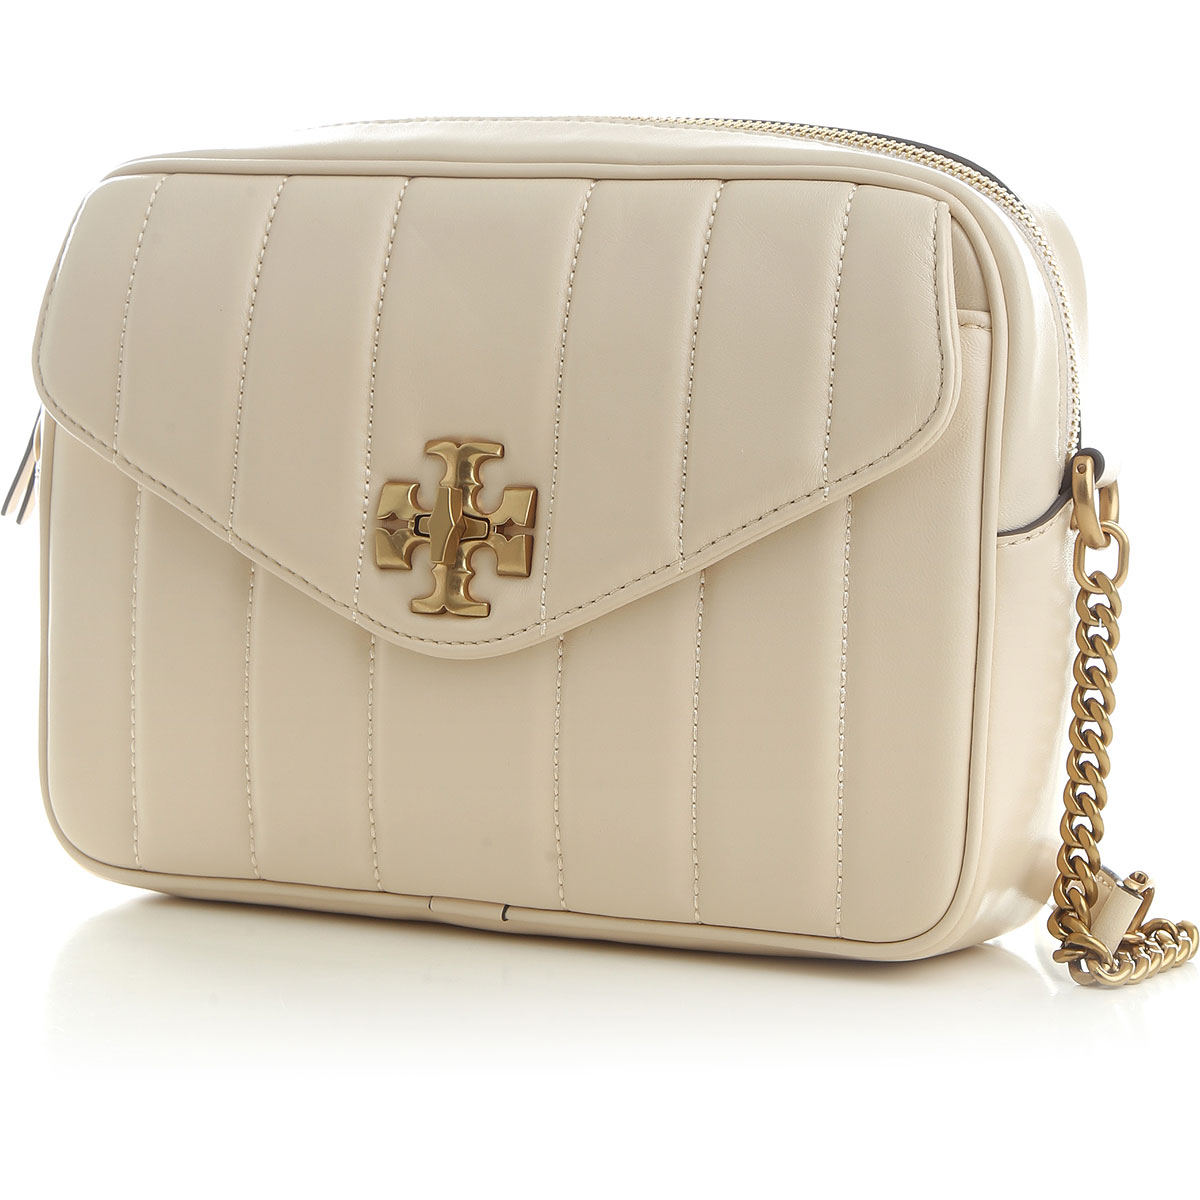 Handbags Tory Burch, Style code: 83088-136-C62